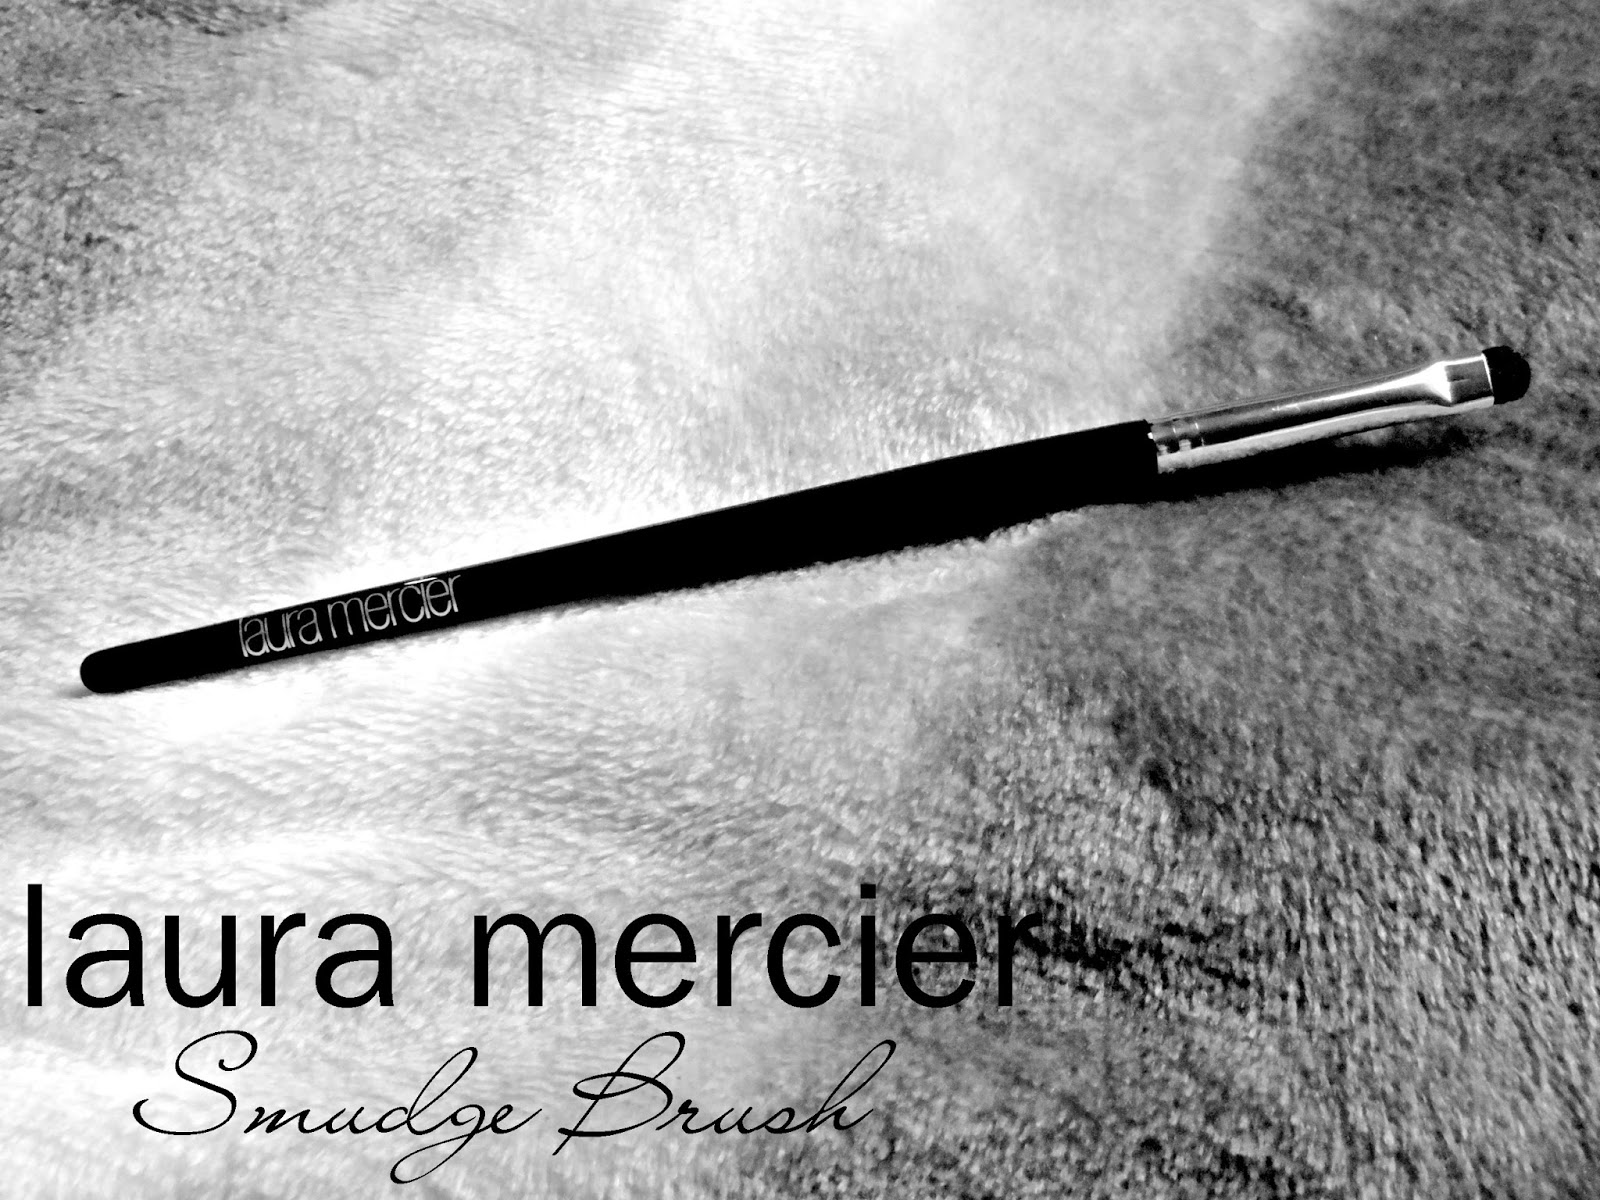 Laura Mercier Smudge Brush Review, Photos